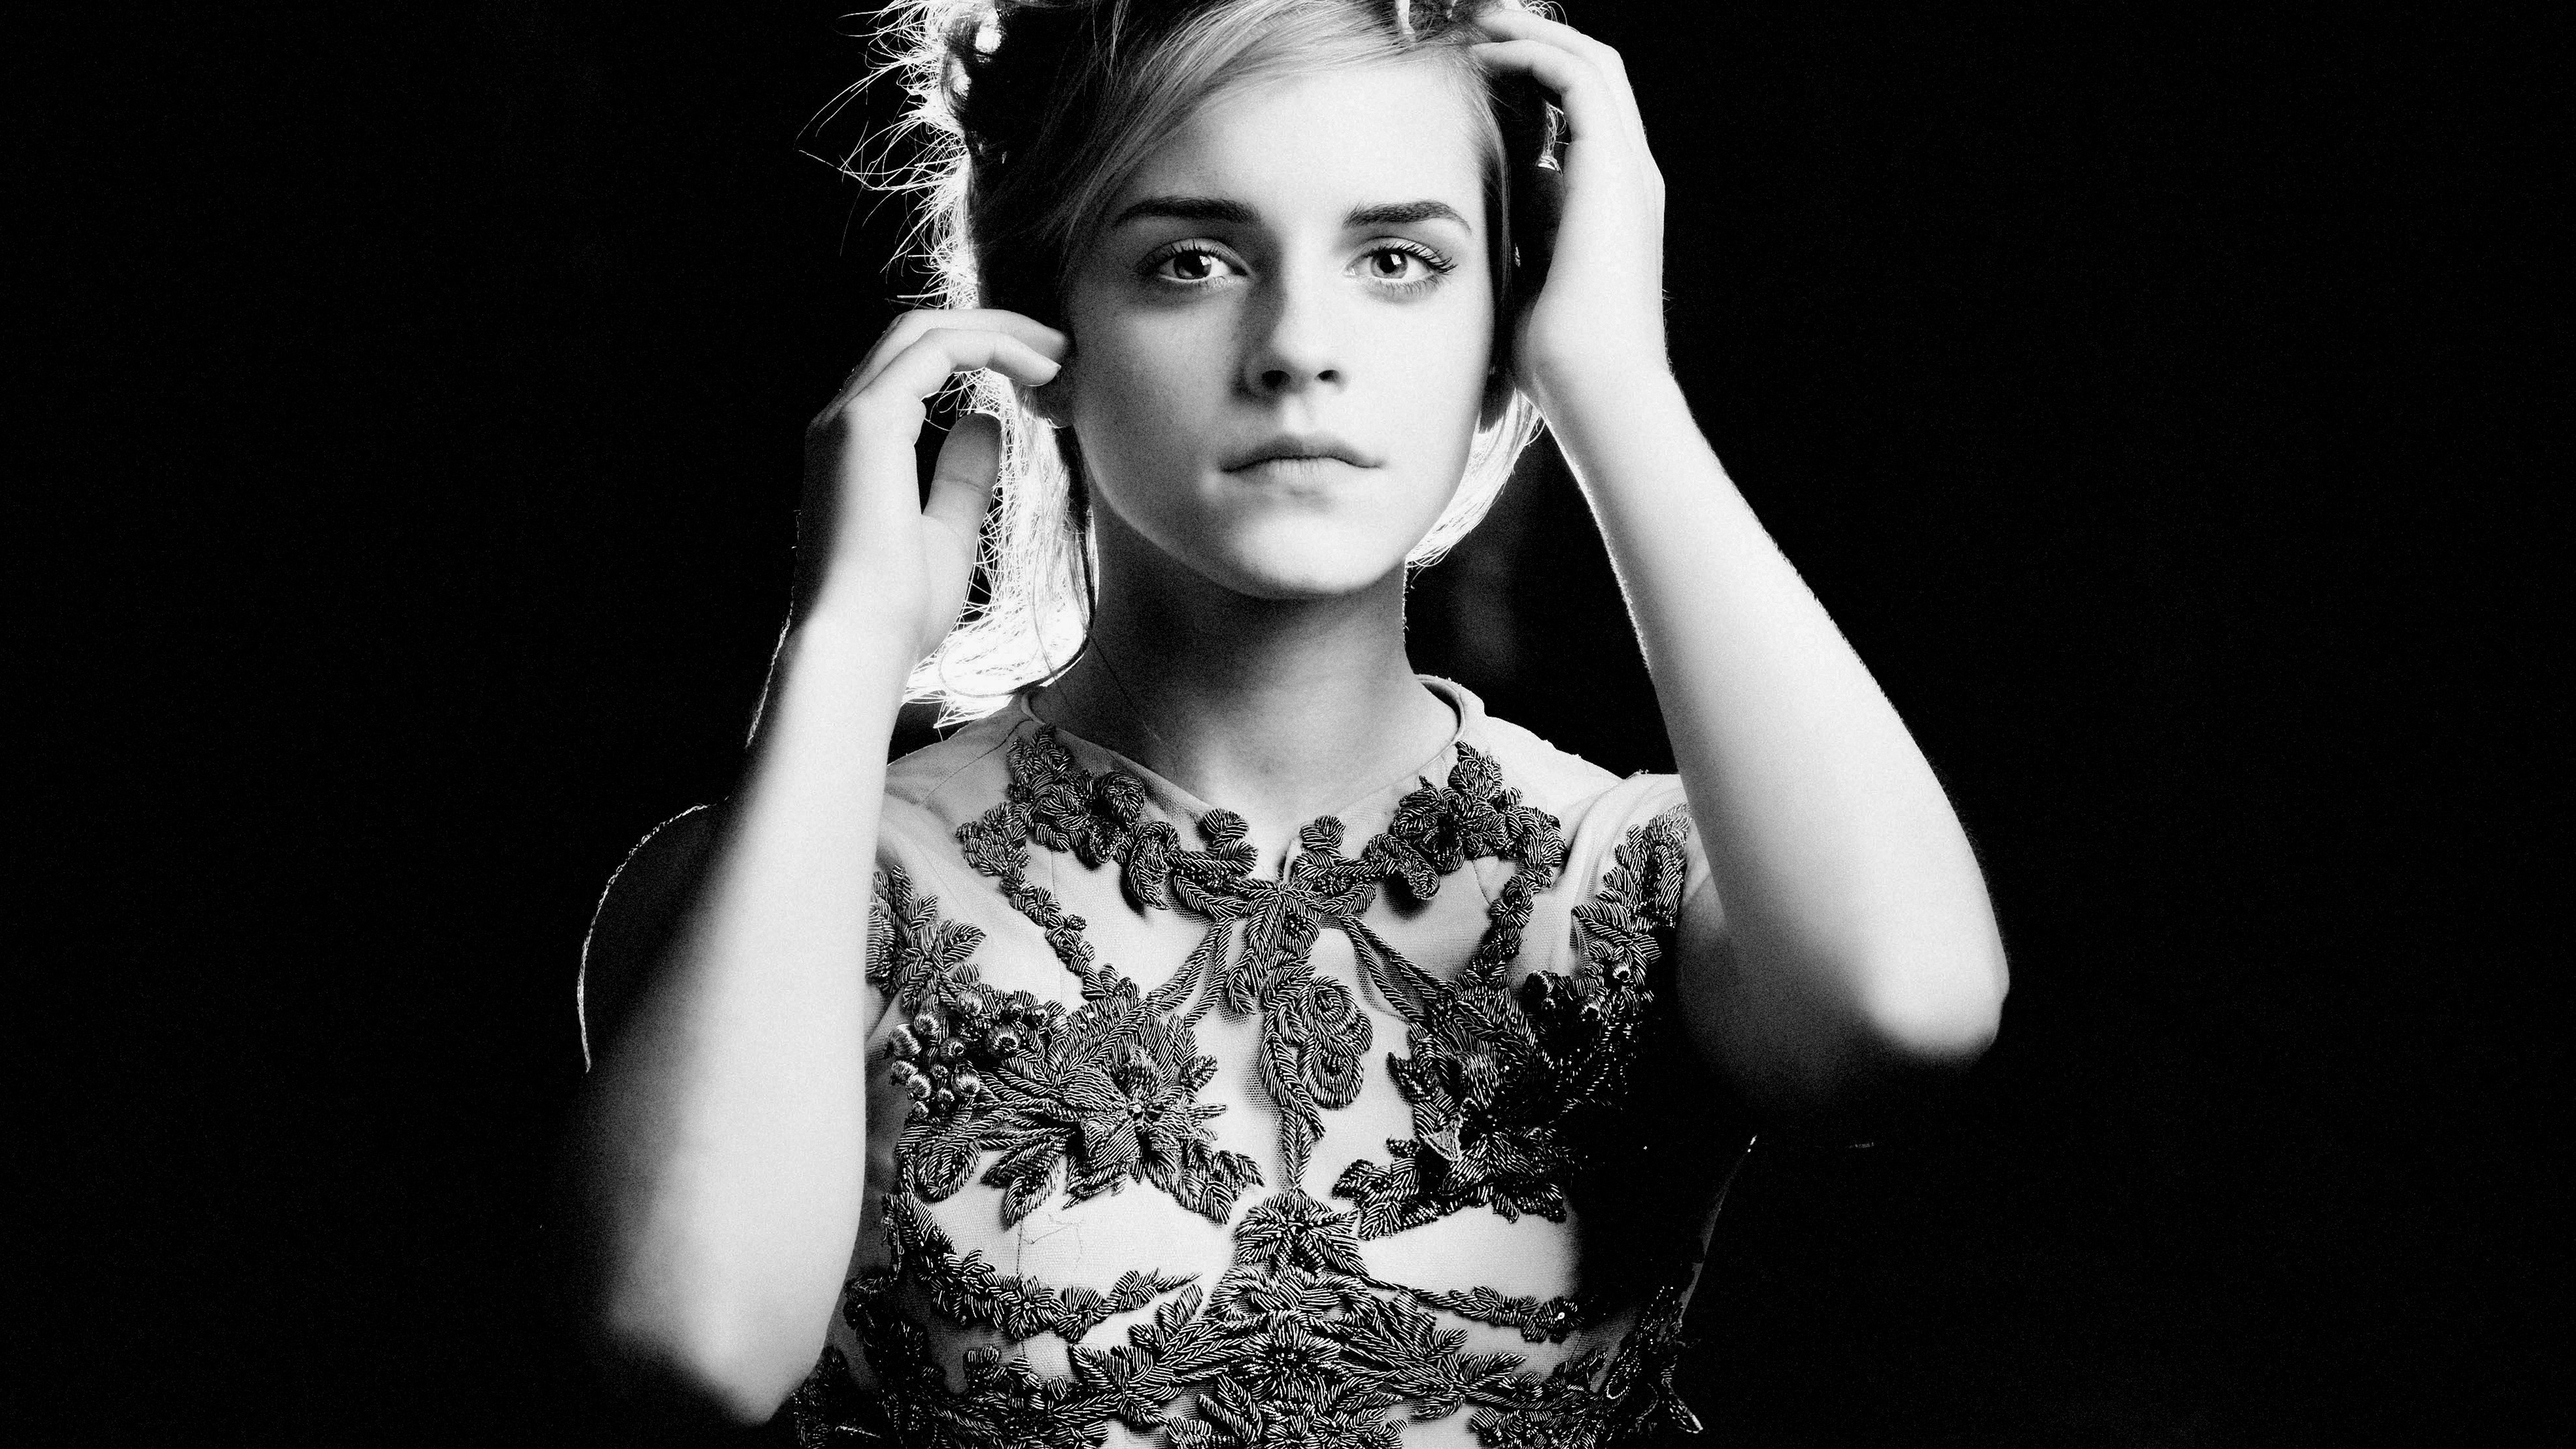 Emma Watson Monochrome 4k, HD Celebrities, 4k Wallpaper, Image, Background, Photo and Picture